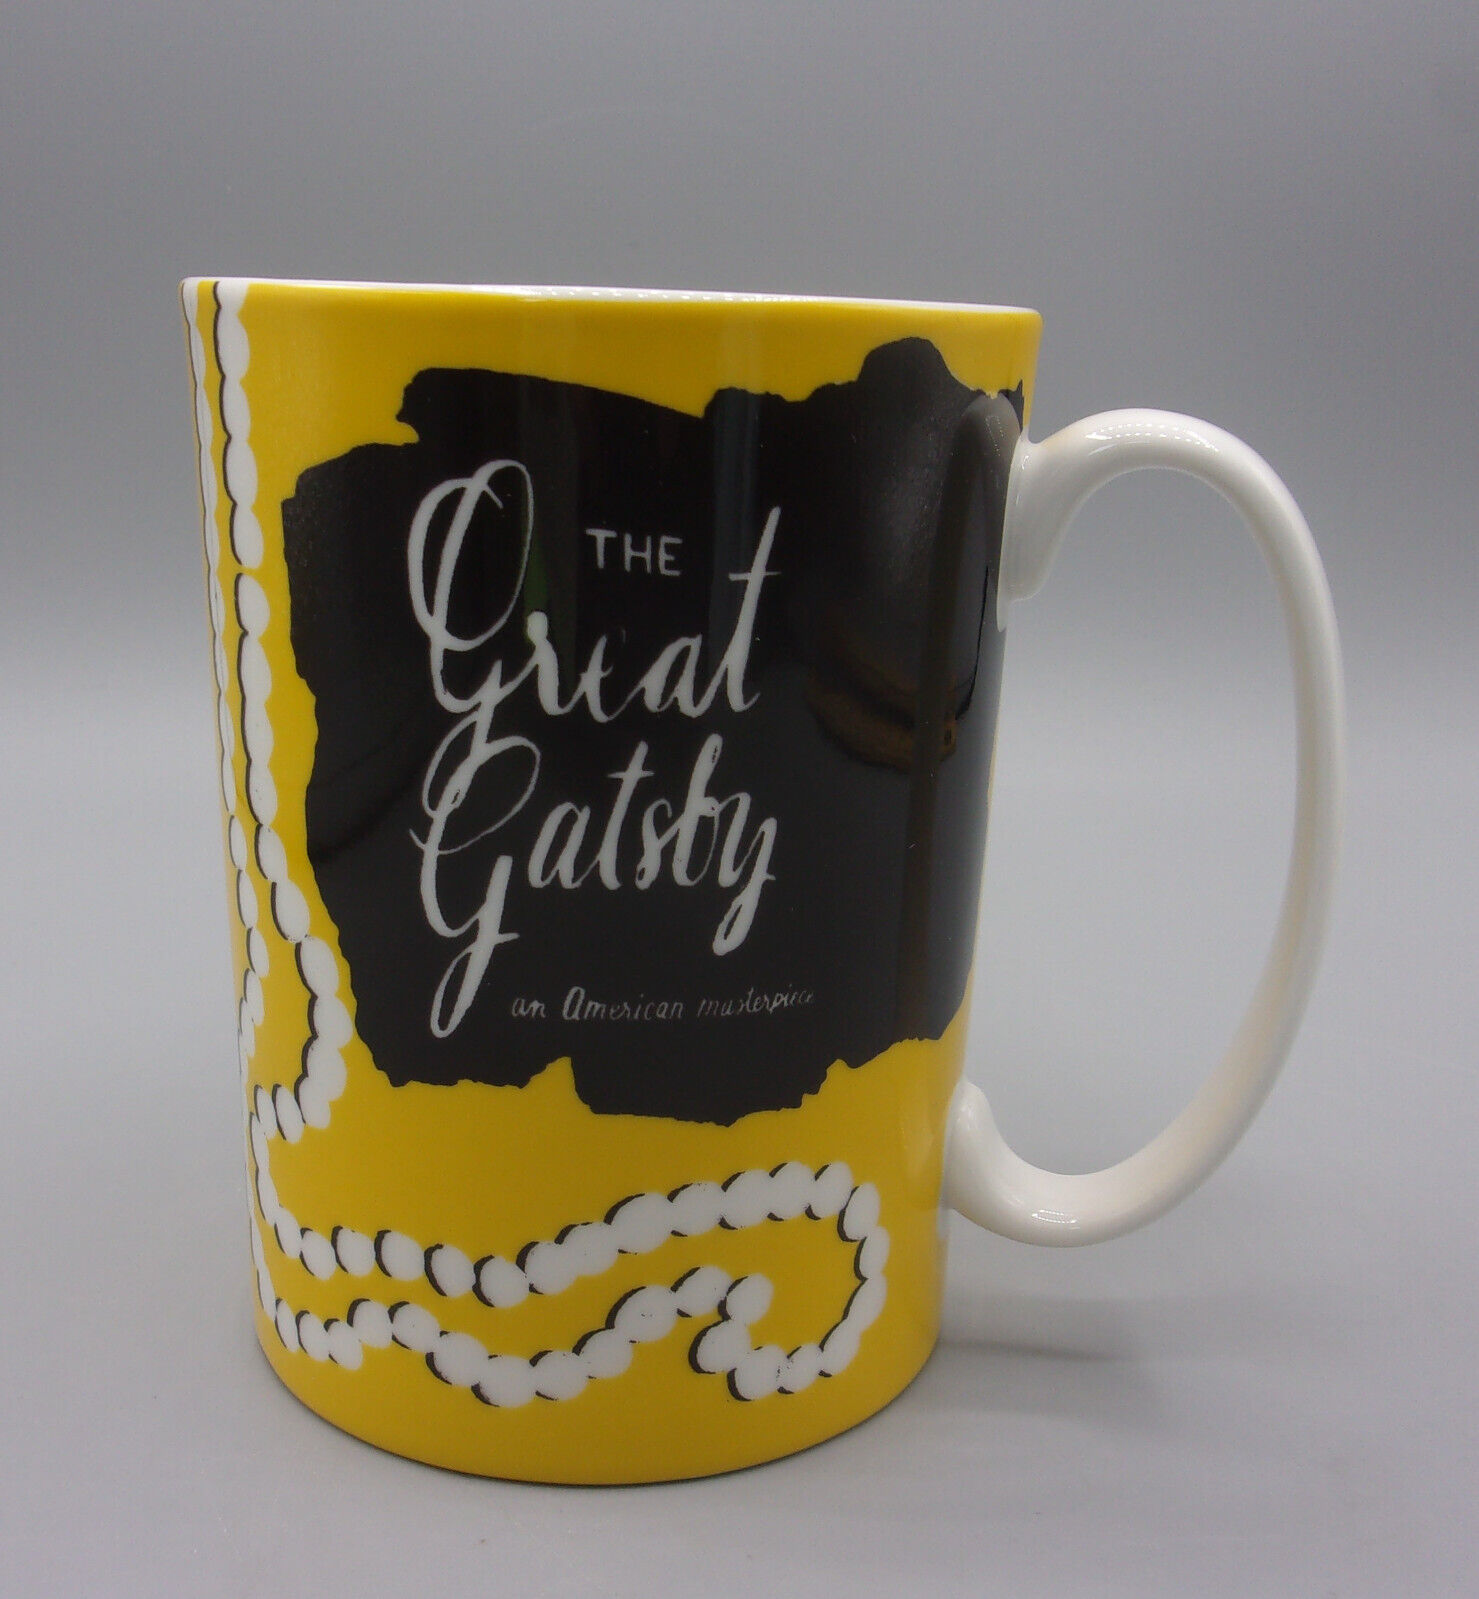 Kate Spade & Lenox “The Great Gatsby” Book Club Coffee Mug -NEW